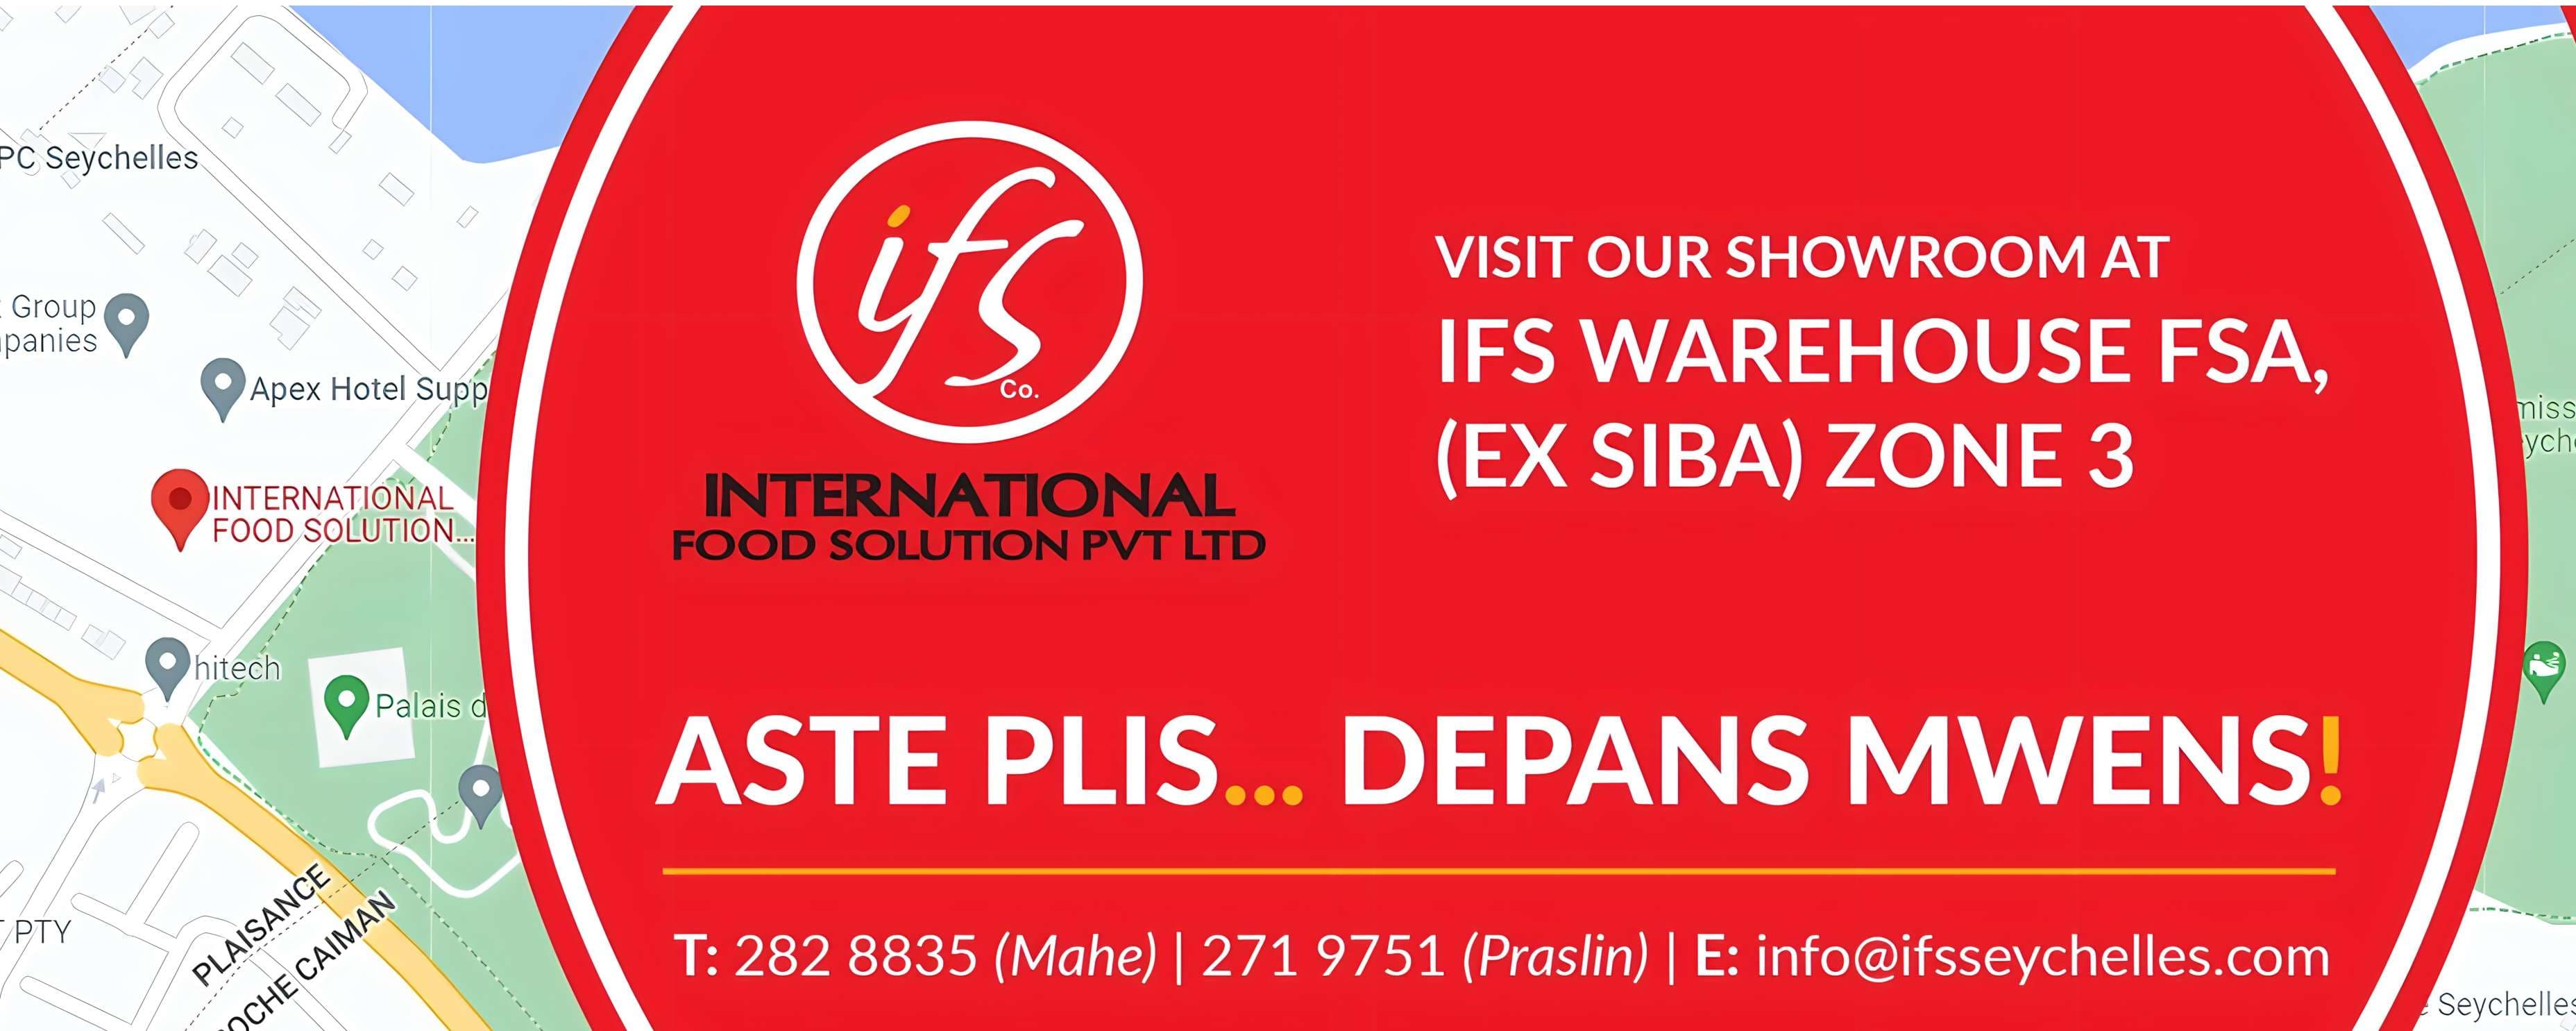 IFS International Food Solutions